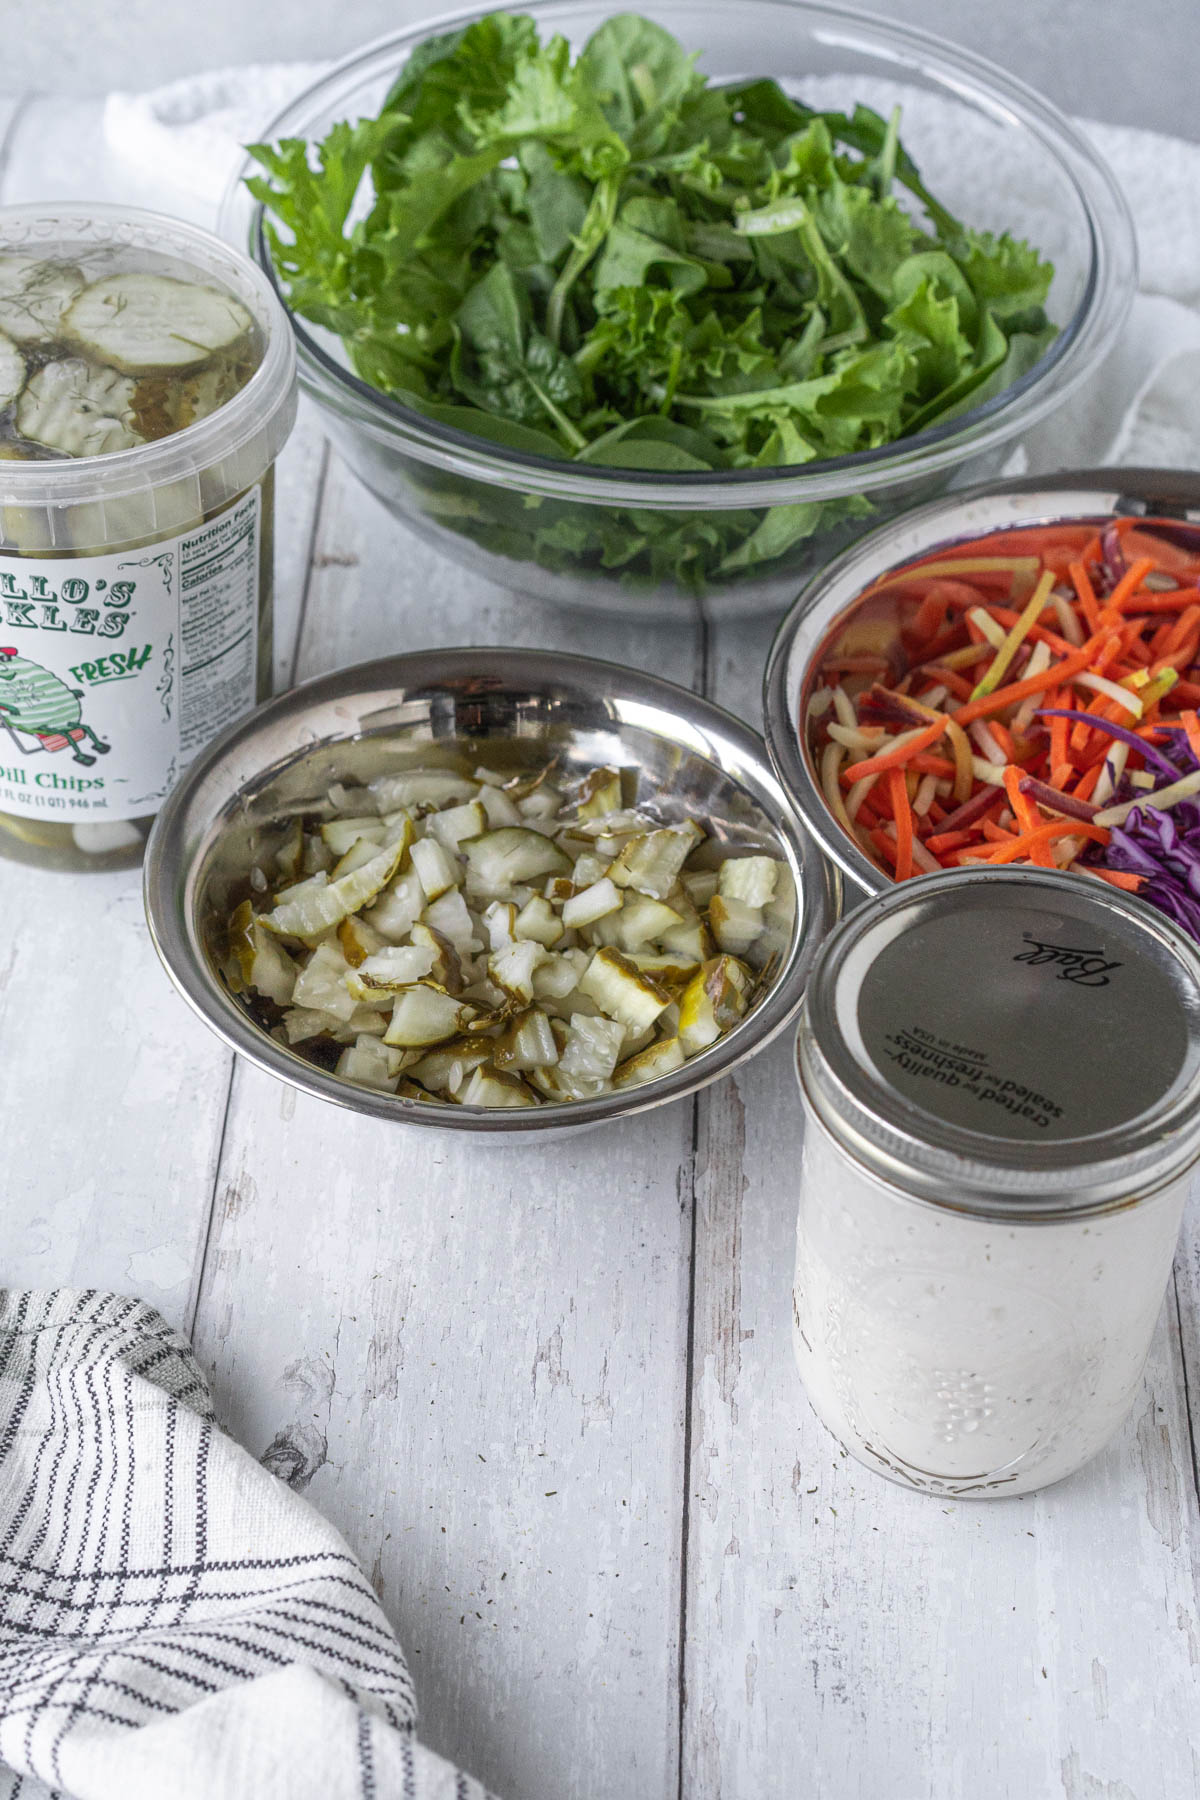 ingredients for a pickle salad (pickles, lettuce, shredded carrots, shredded cabbage, ranch dressing) arranged in bowls and jars